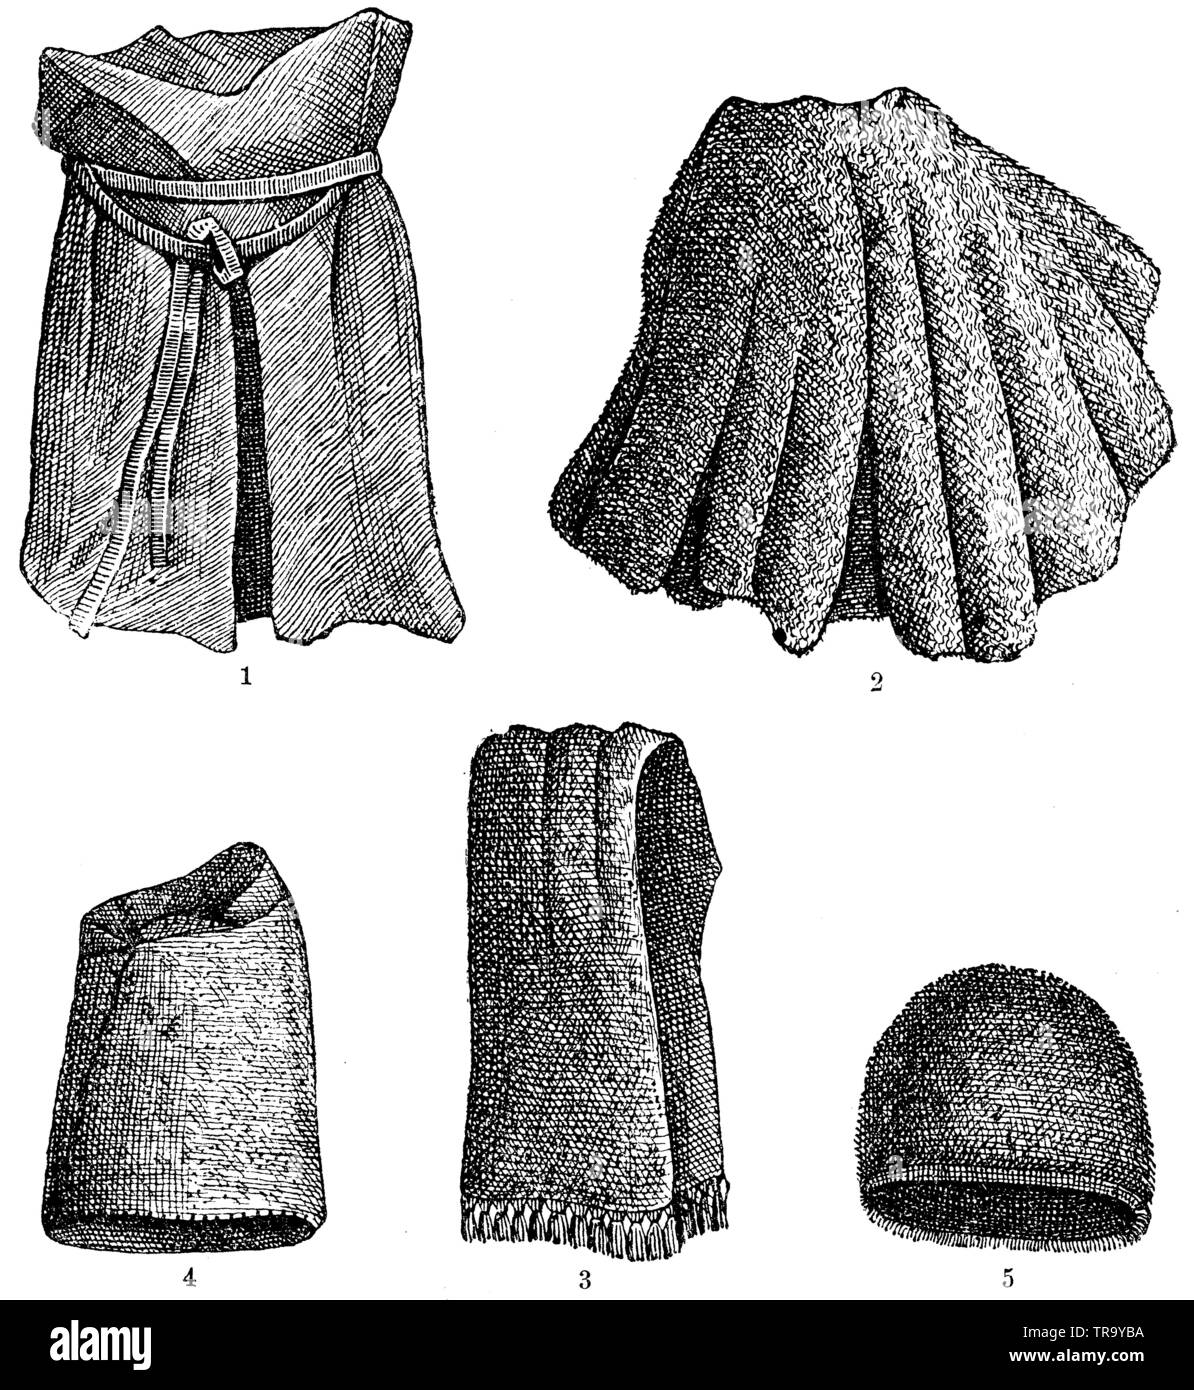 Woolen garments from the Bronze Age, found in a Danish tomb. 1) Wollen skirt, 2) Wollen coat, 3) Wollen plaid, 4, 5) Wollen hats, ,  (anthropology book, 1874) Stock Photo